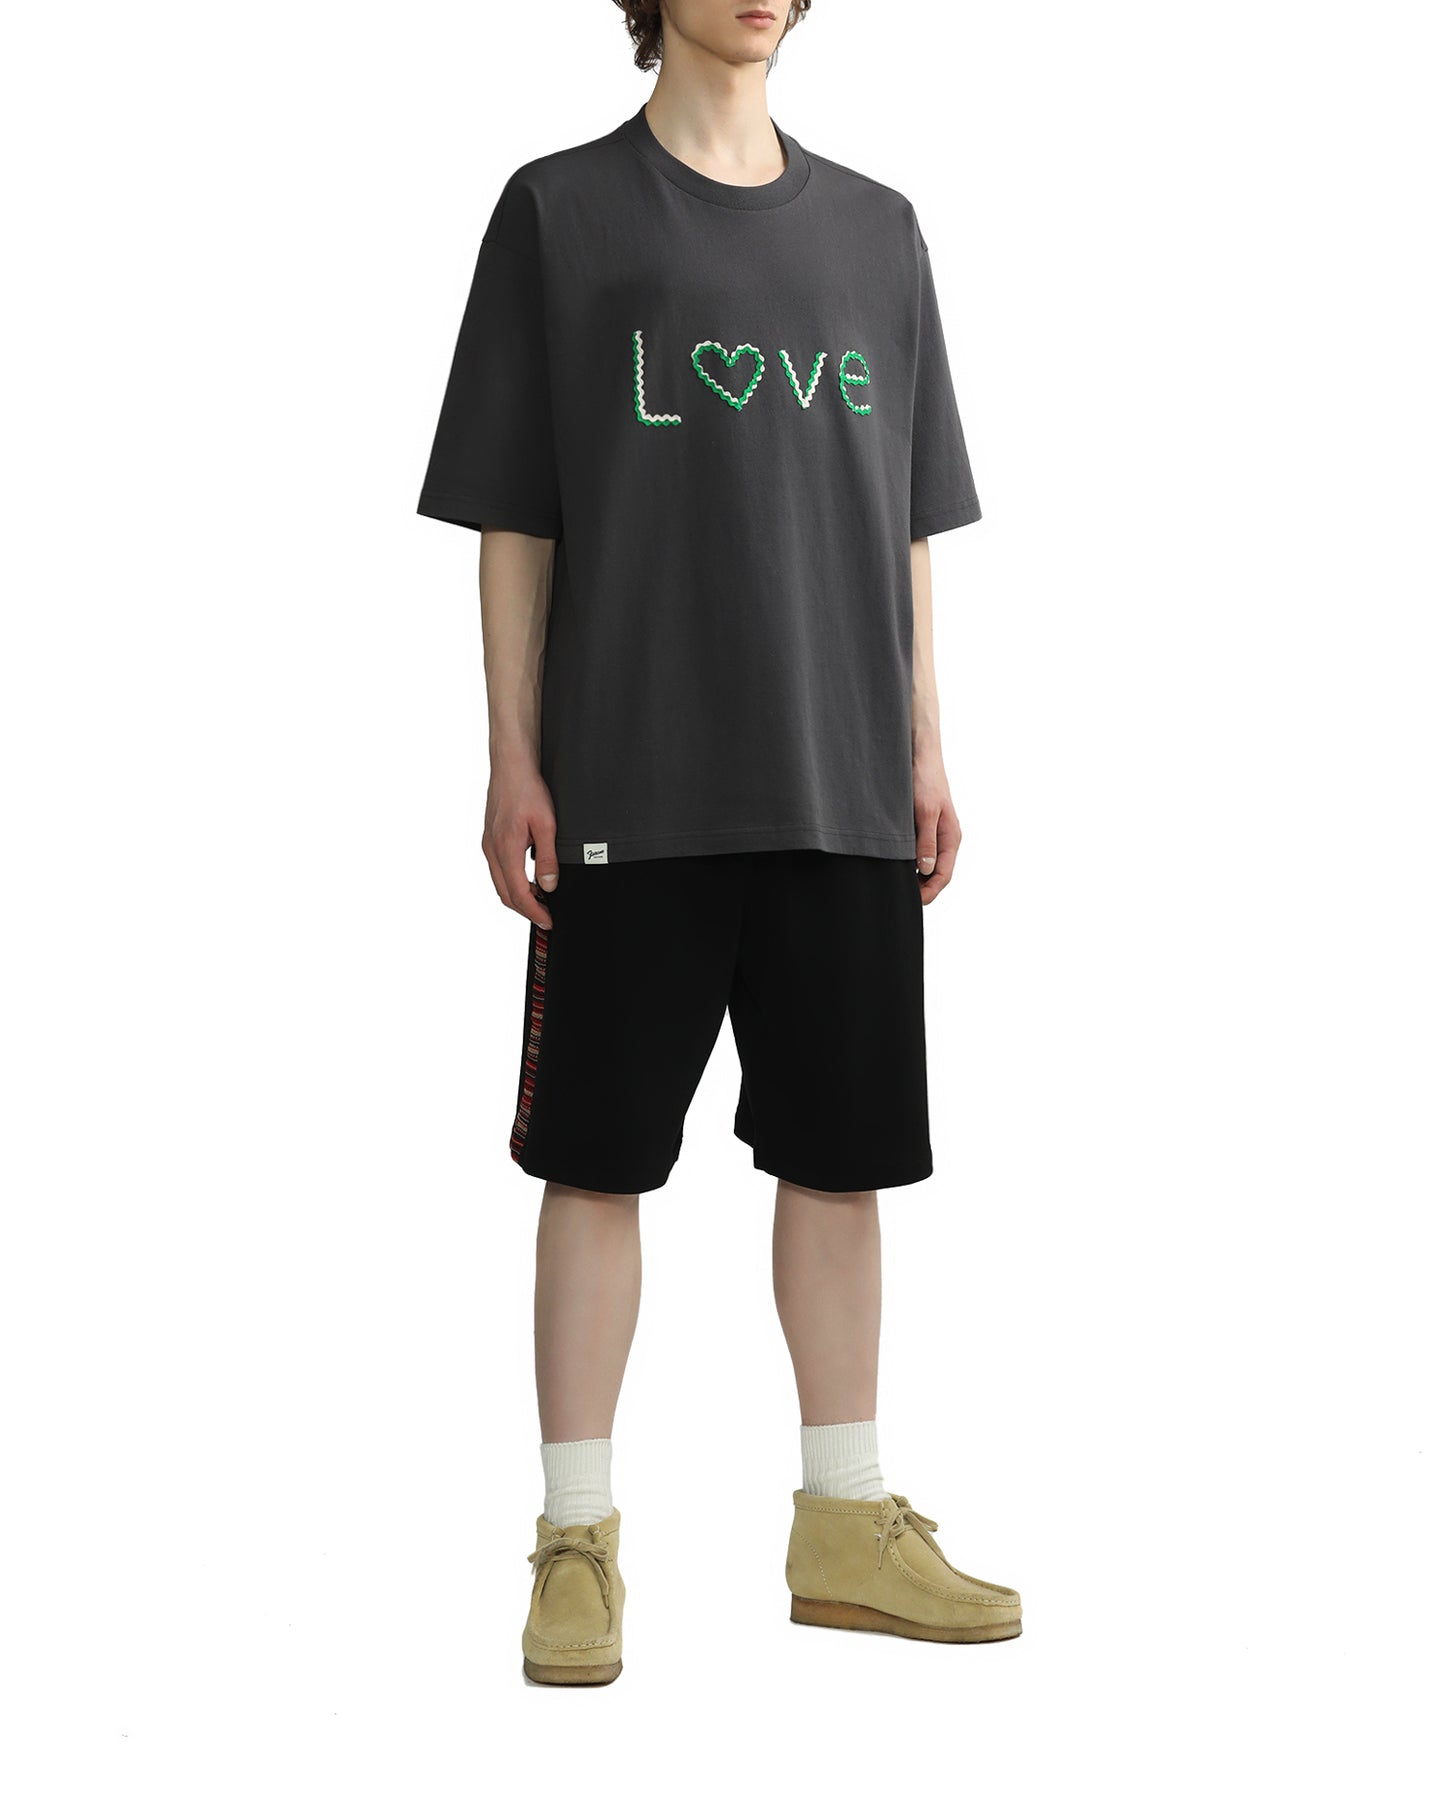 Men's Love T-shirt in Charcoal